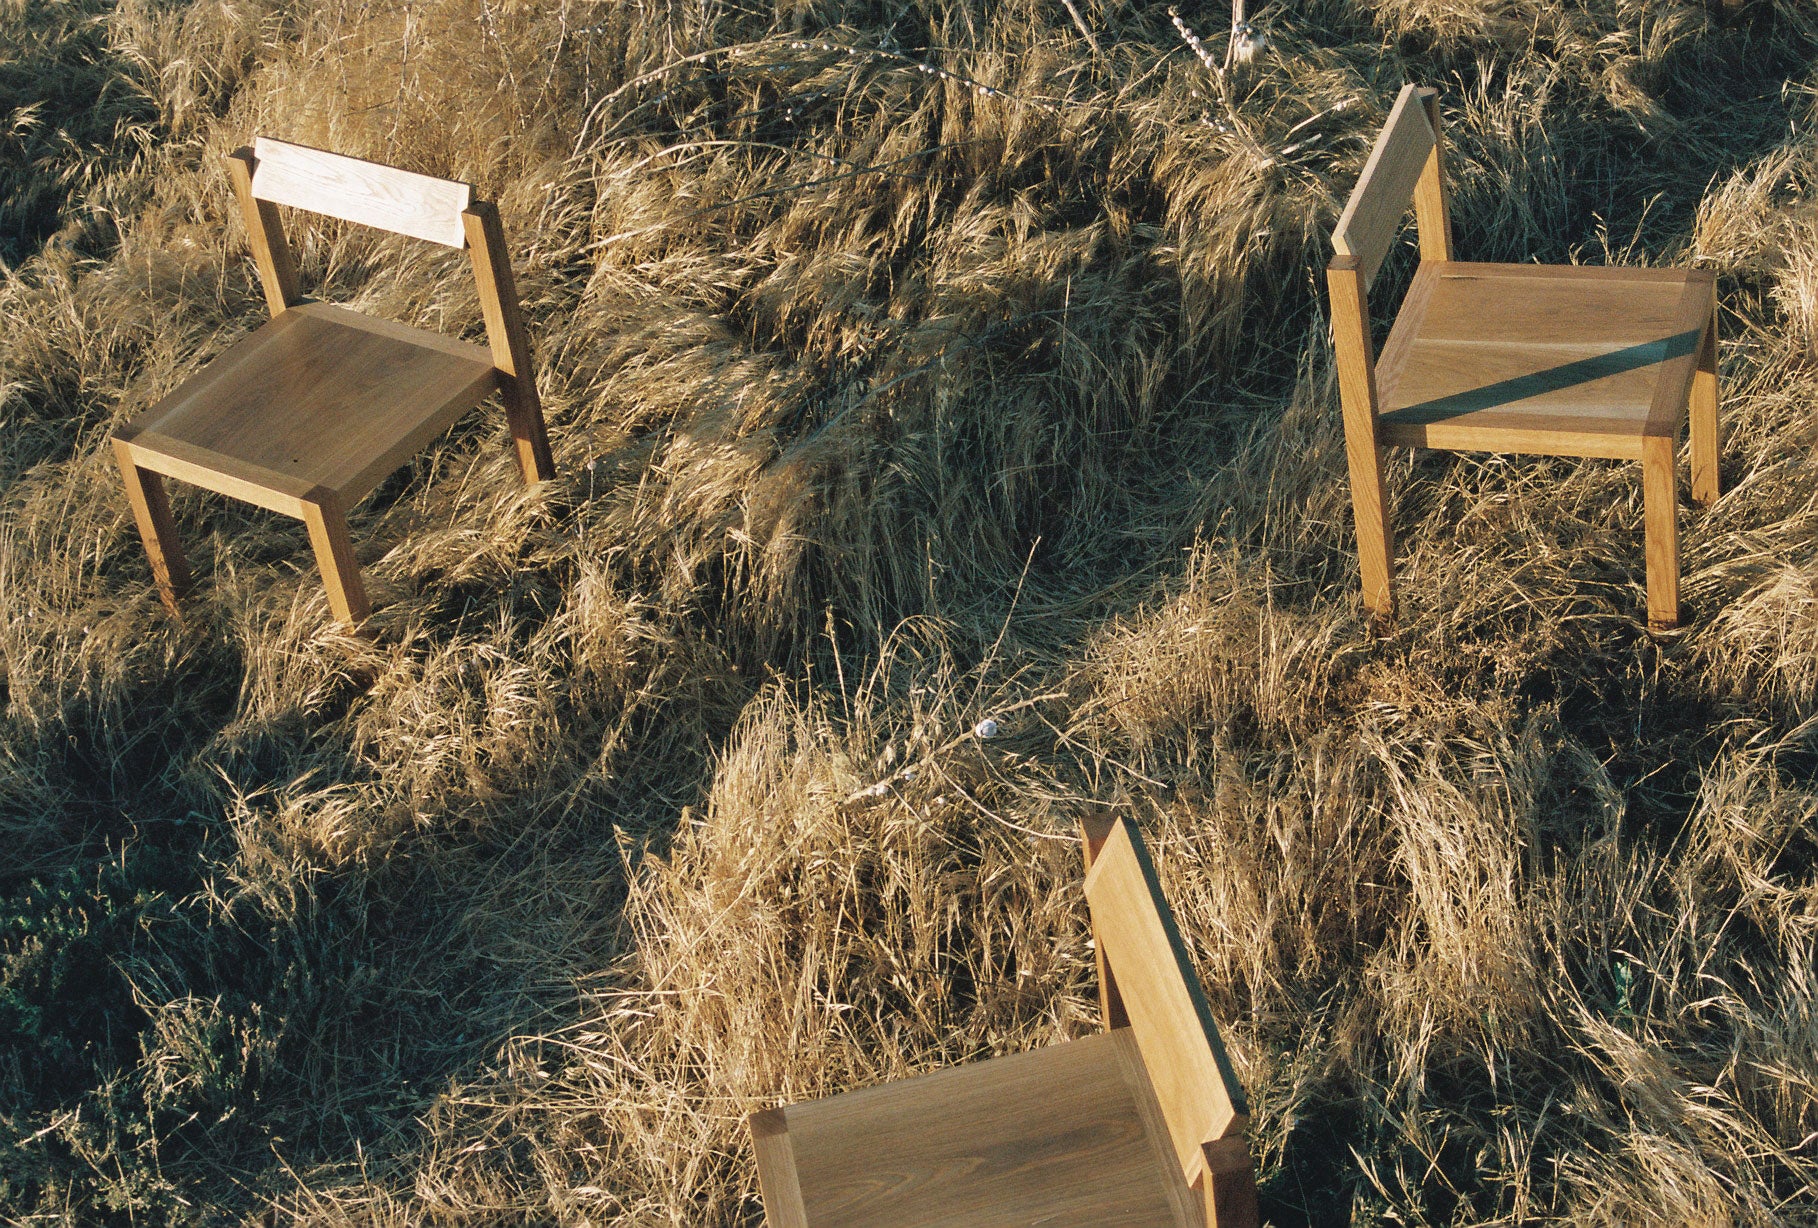 Three Anything Chairs arranged in grassland